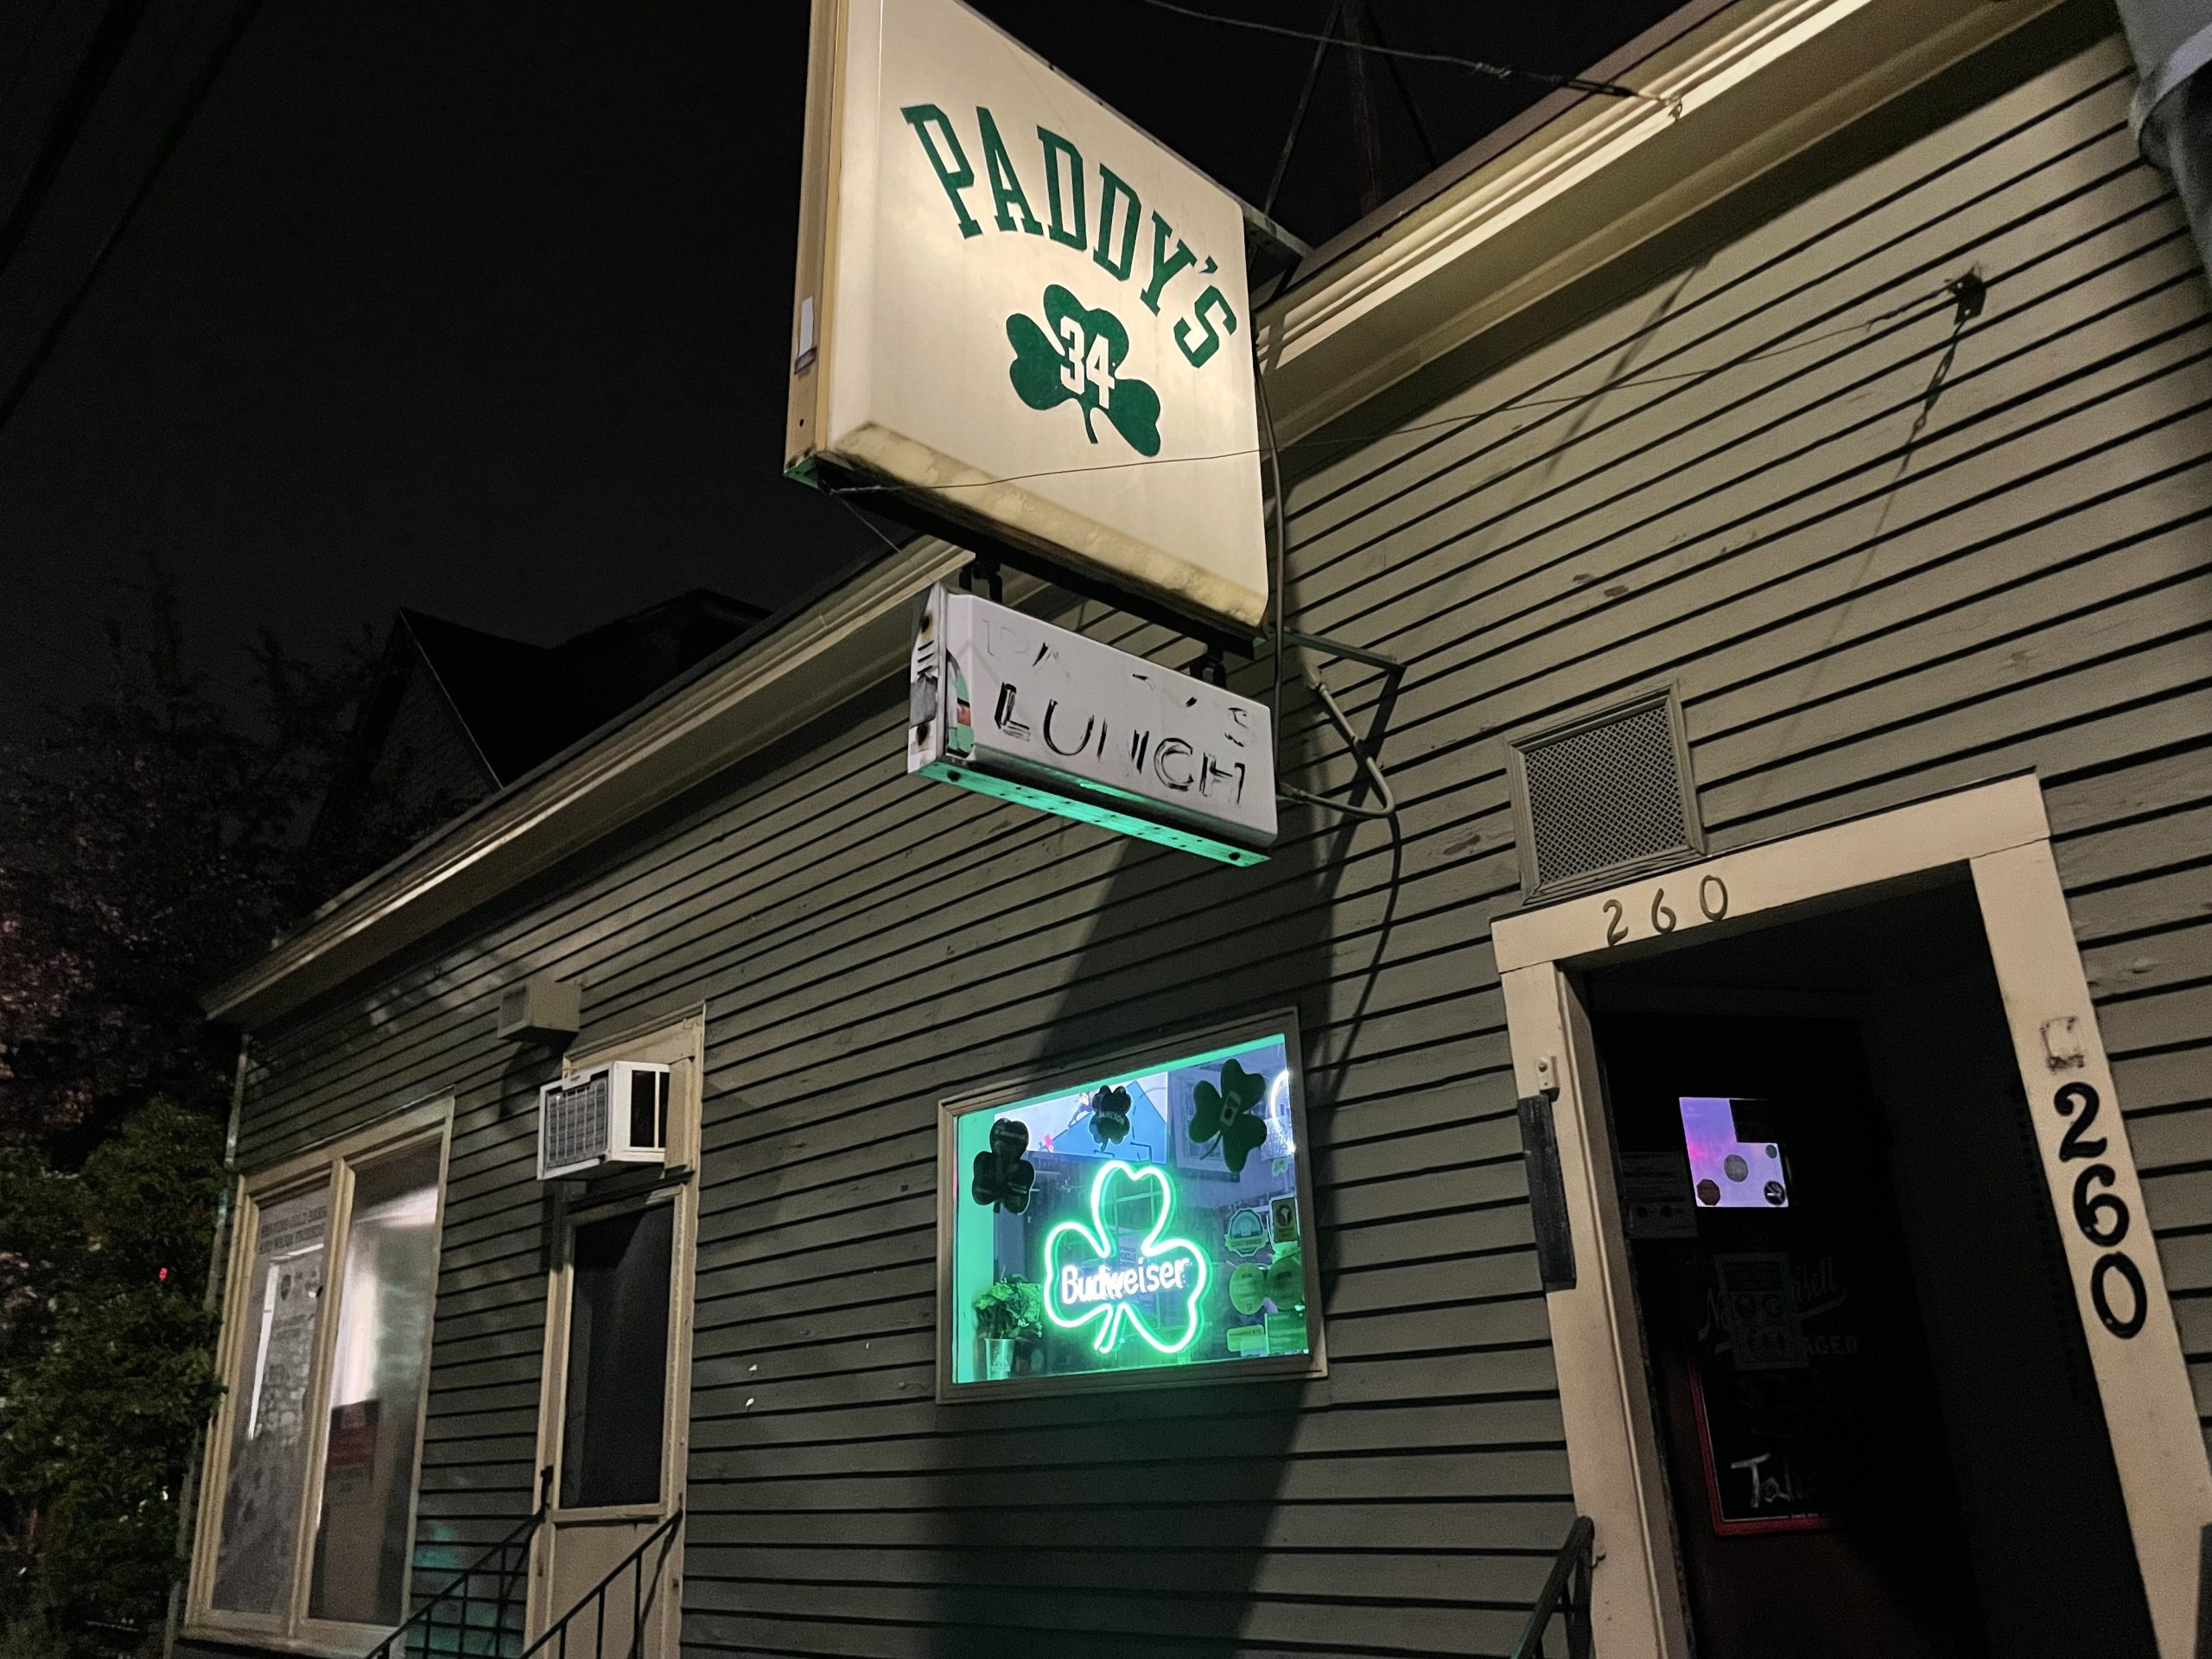 Paddy's Lunch - Boston Cambridge Dive Bar - Outside